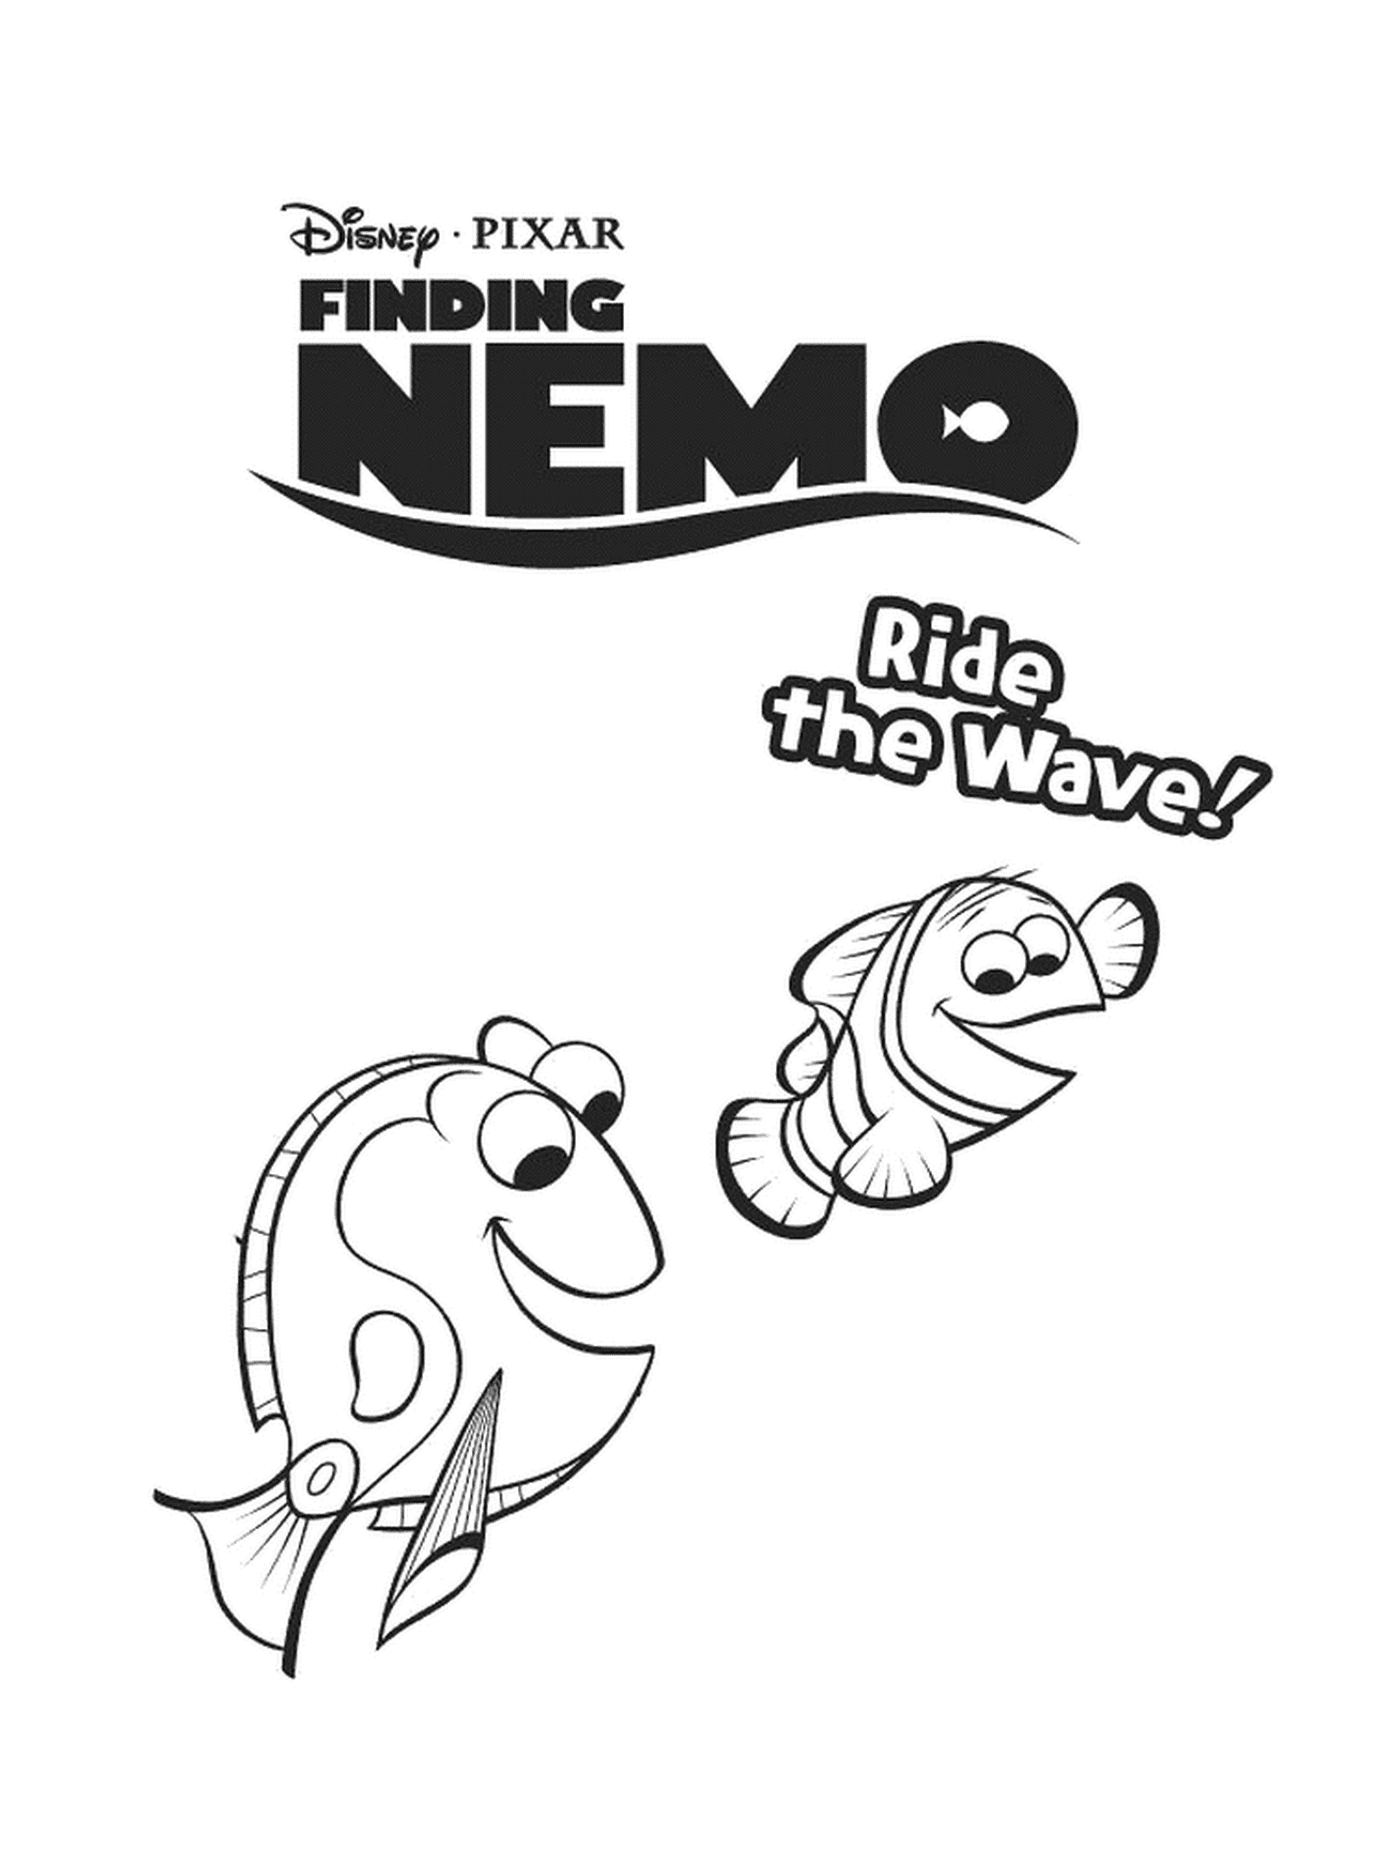  Nemo e seu pai 